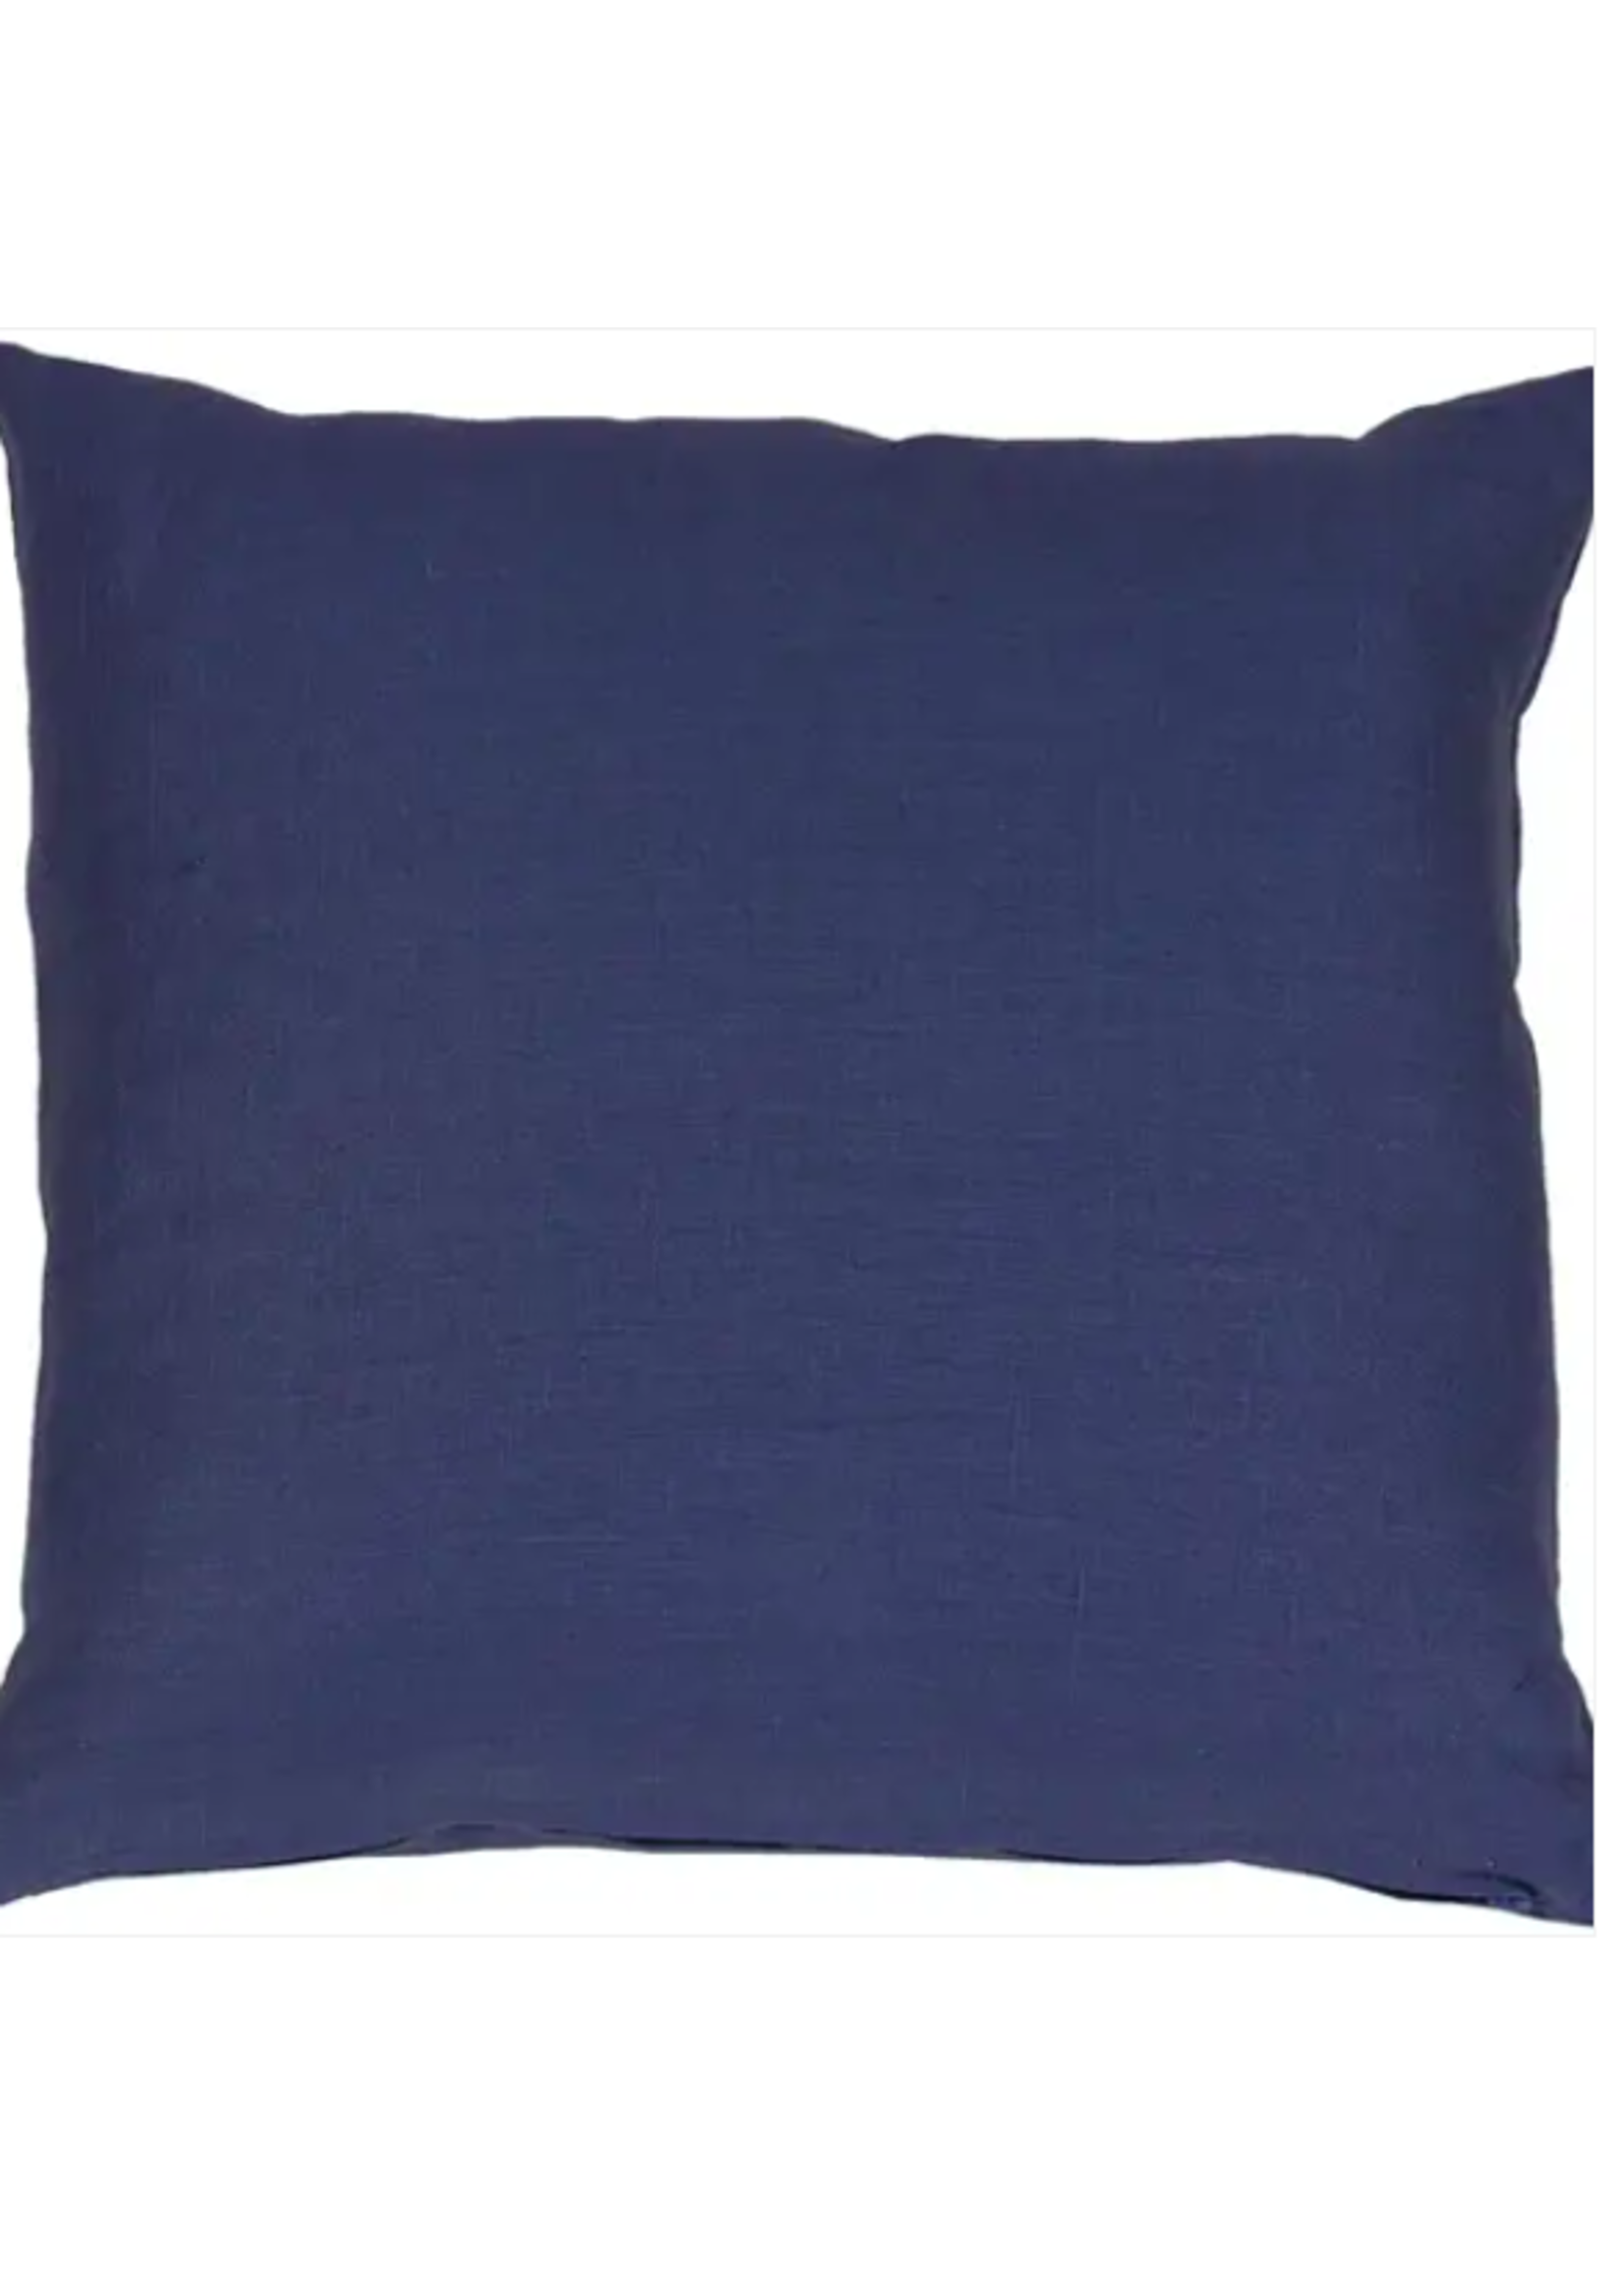 Indigo Blue Tuscany Linen Pillow-20x20